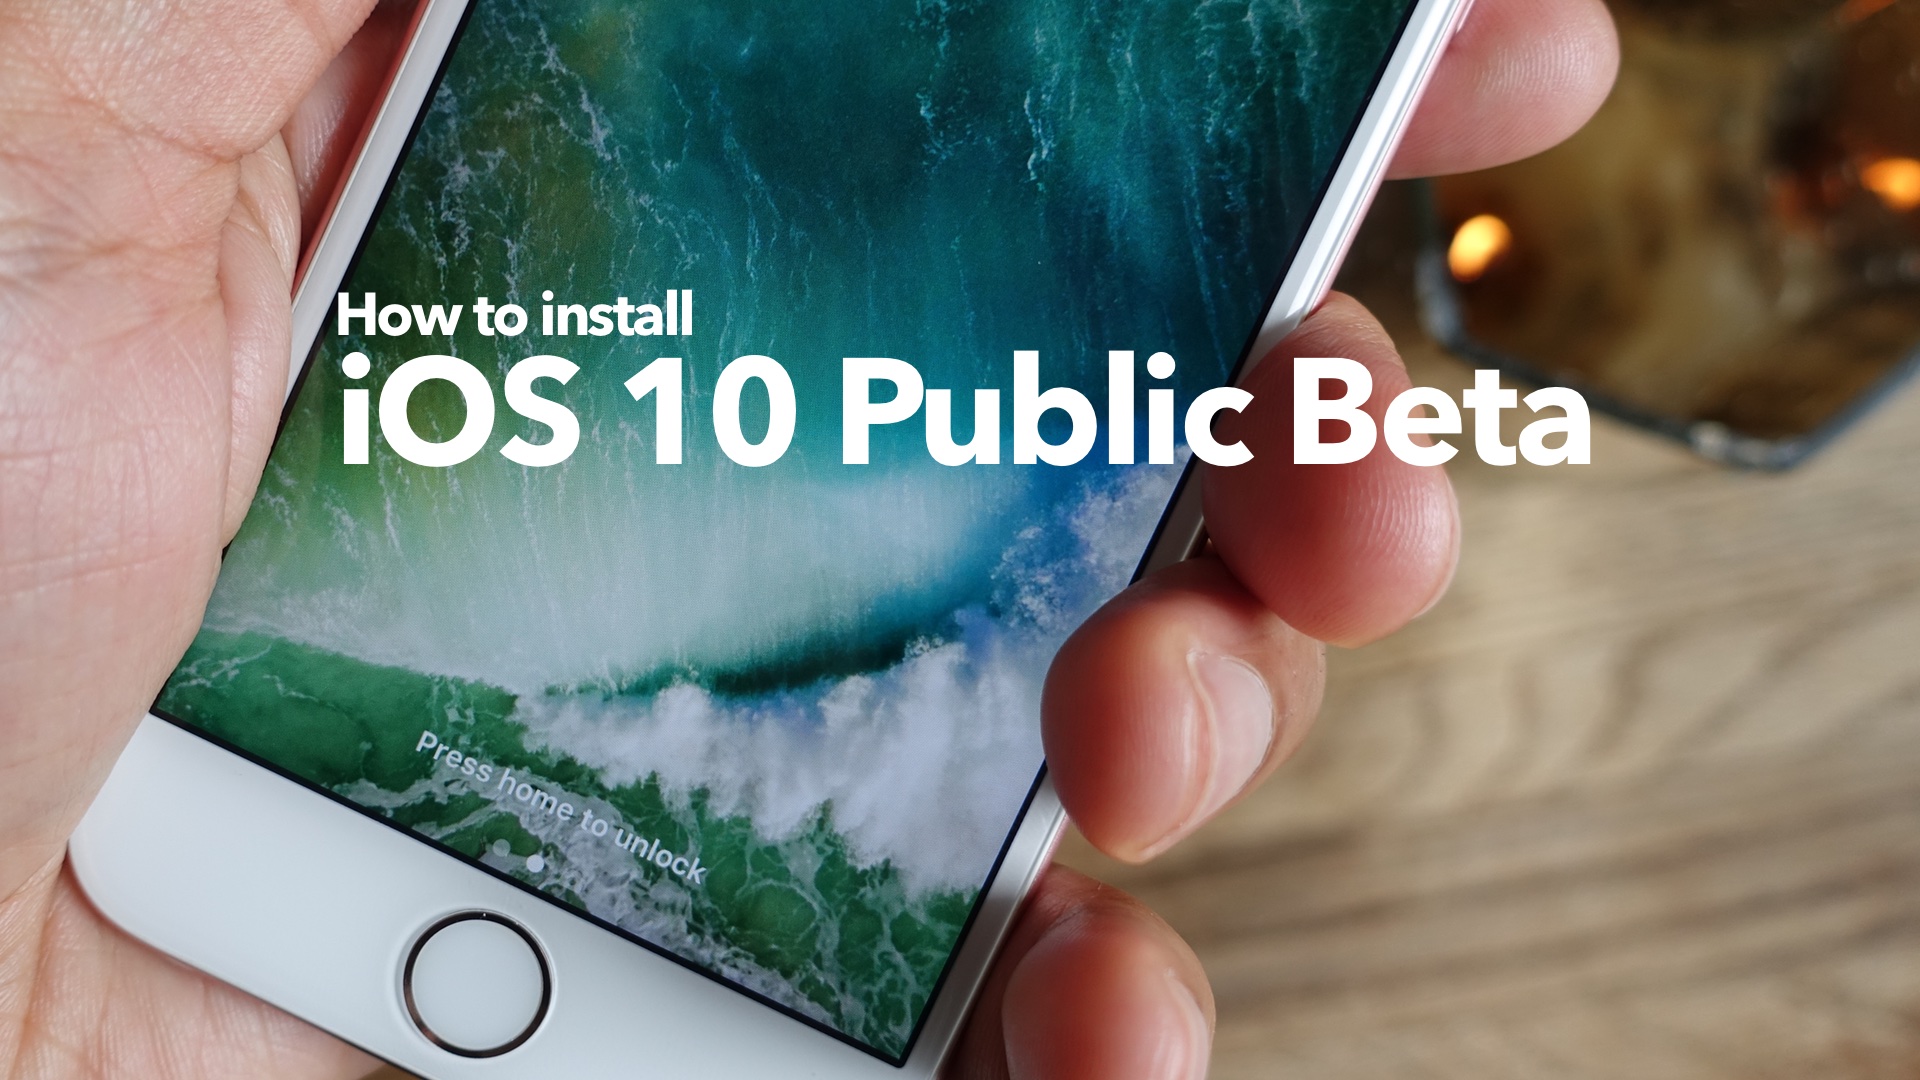 ios 10 beta profile download free